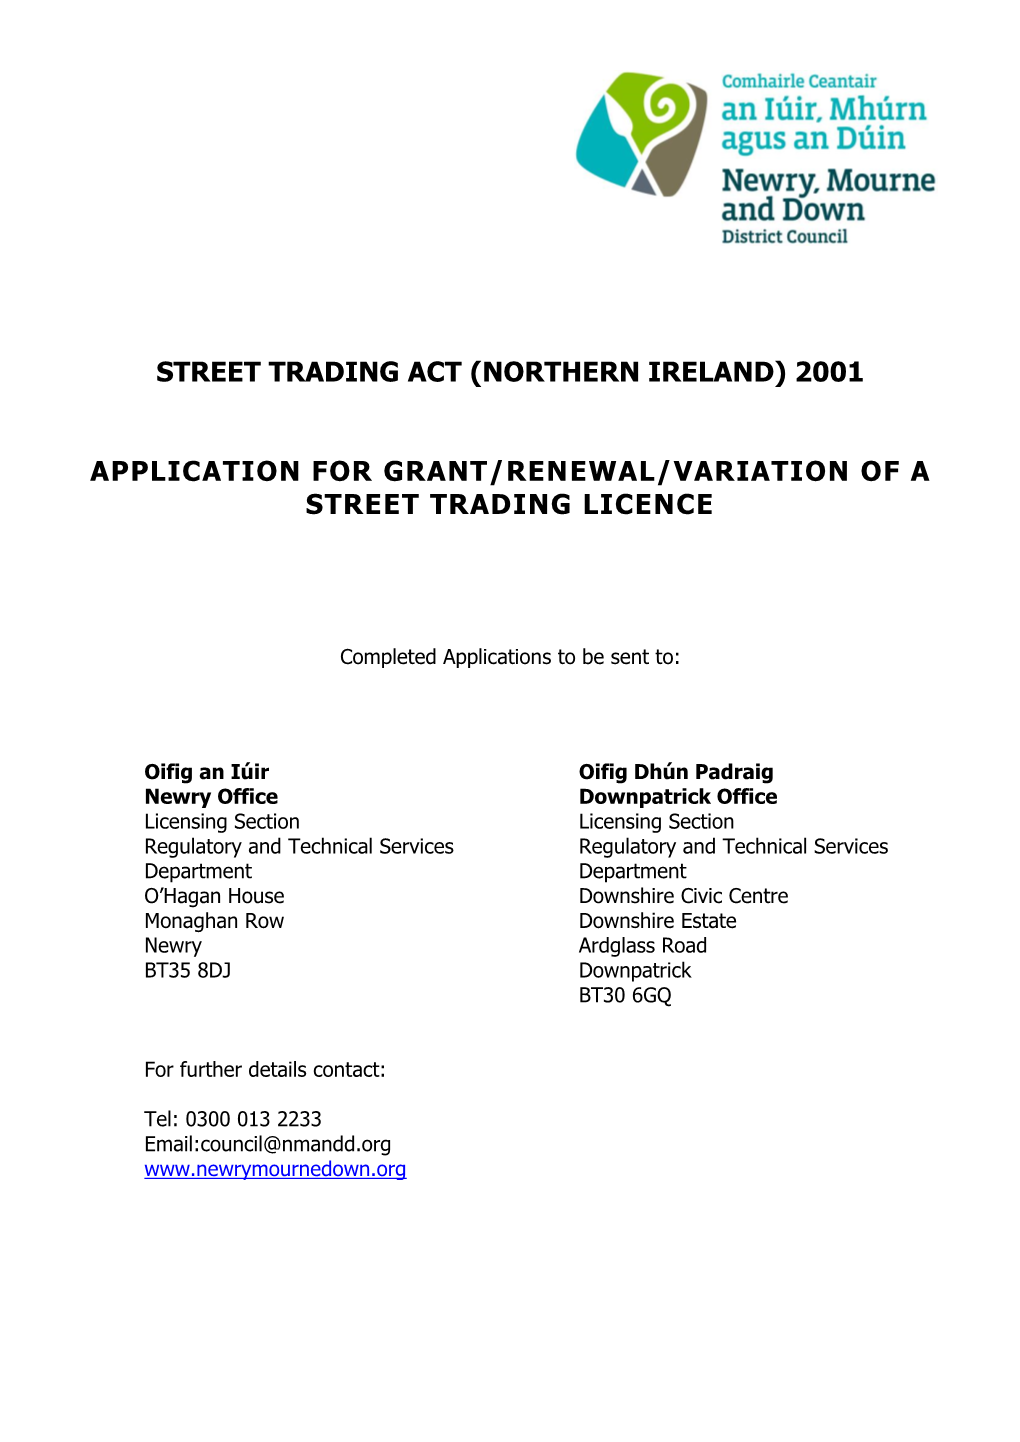 Street Trading Act (Northern Ireland) 2001